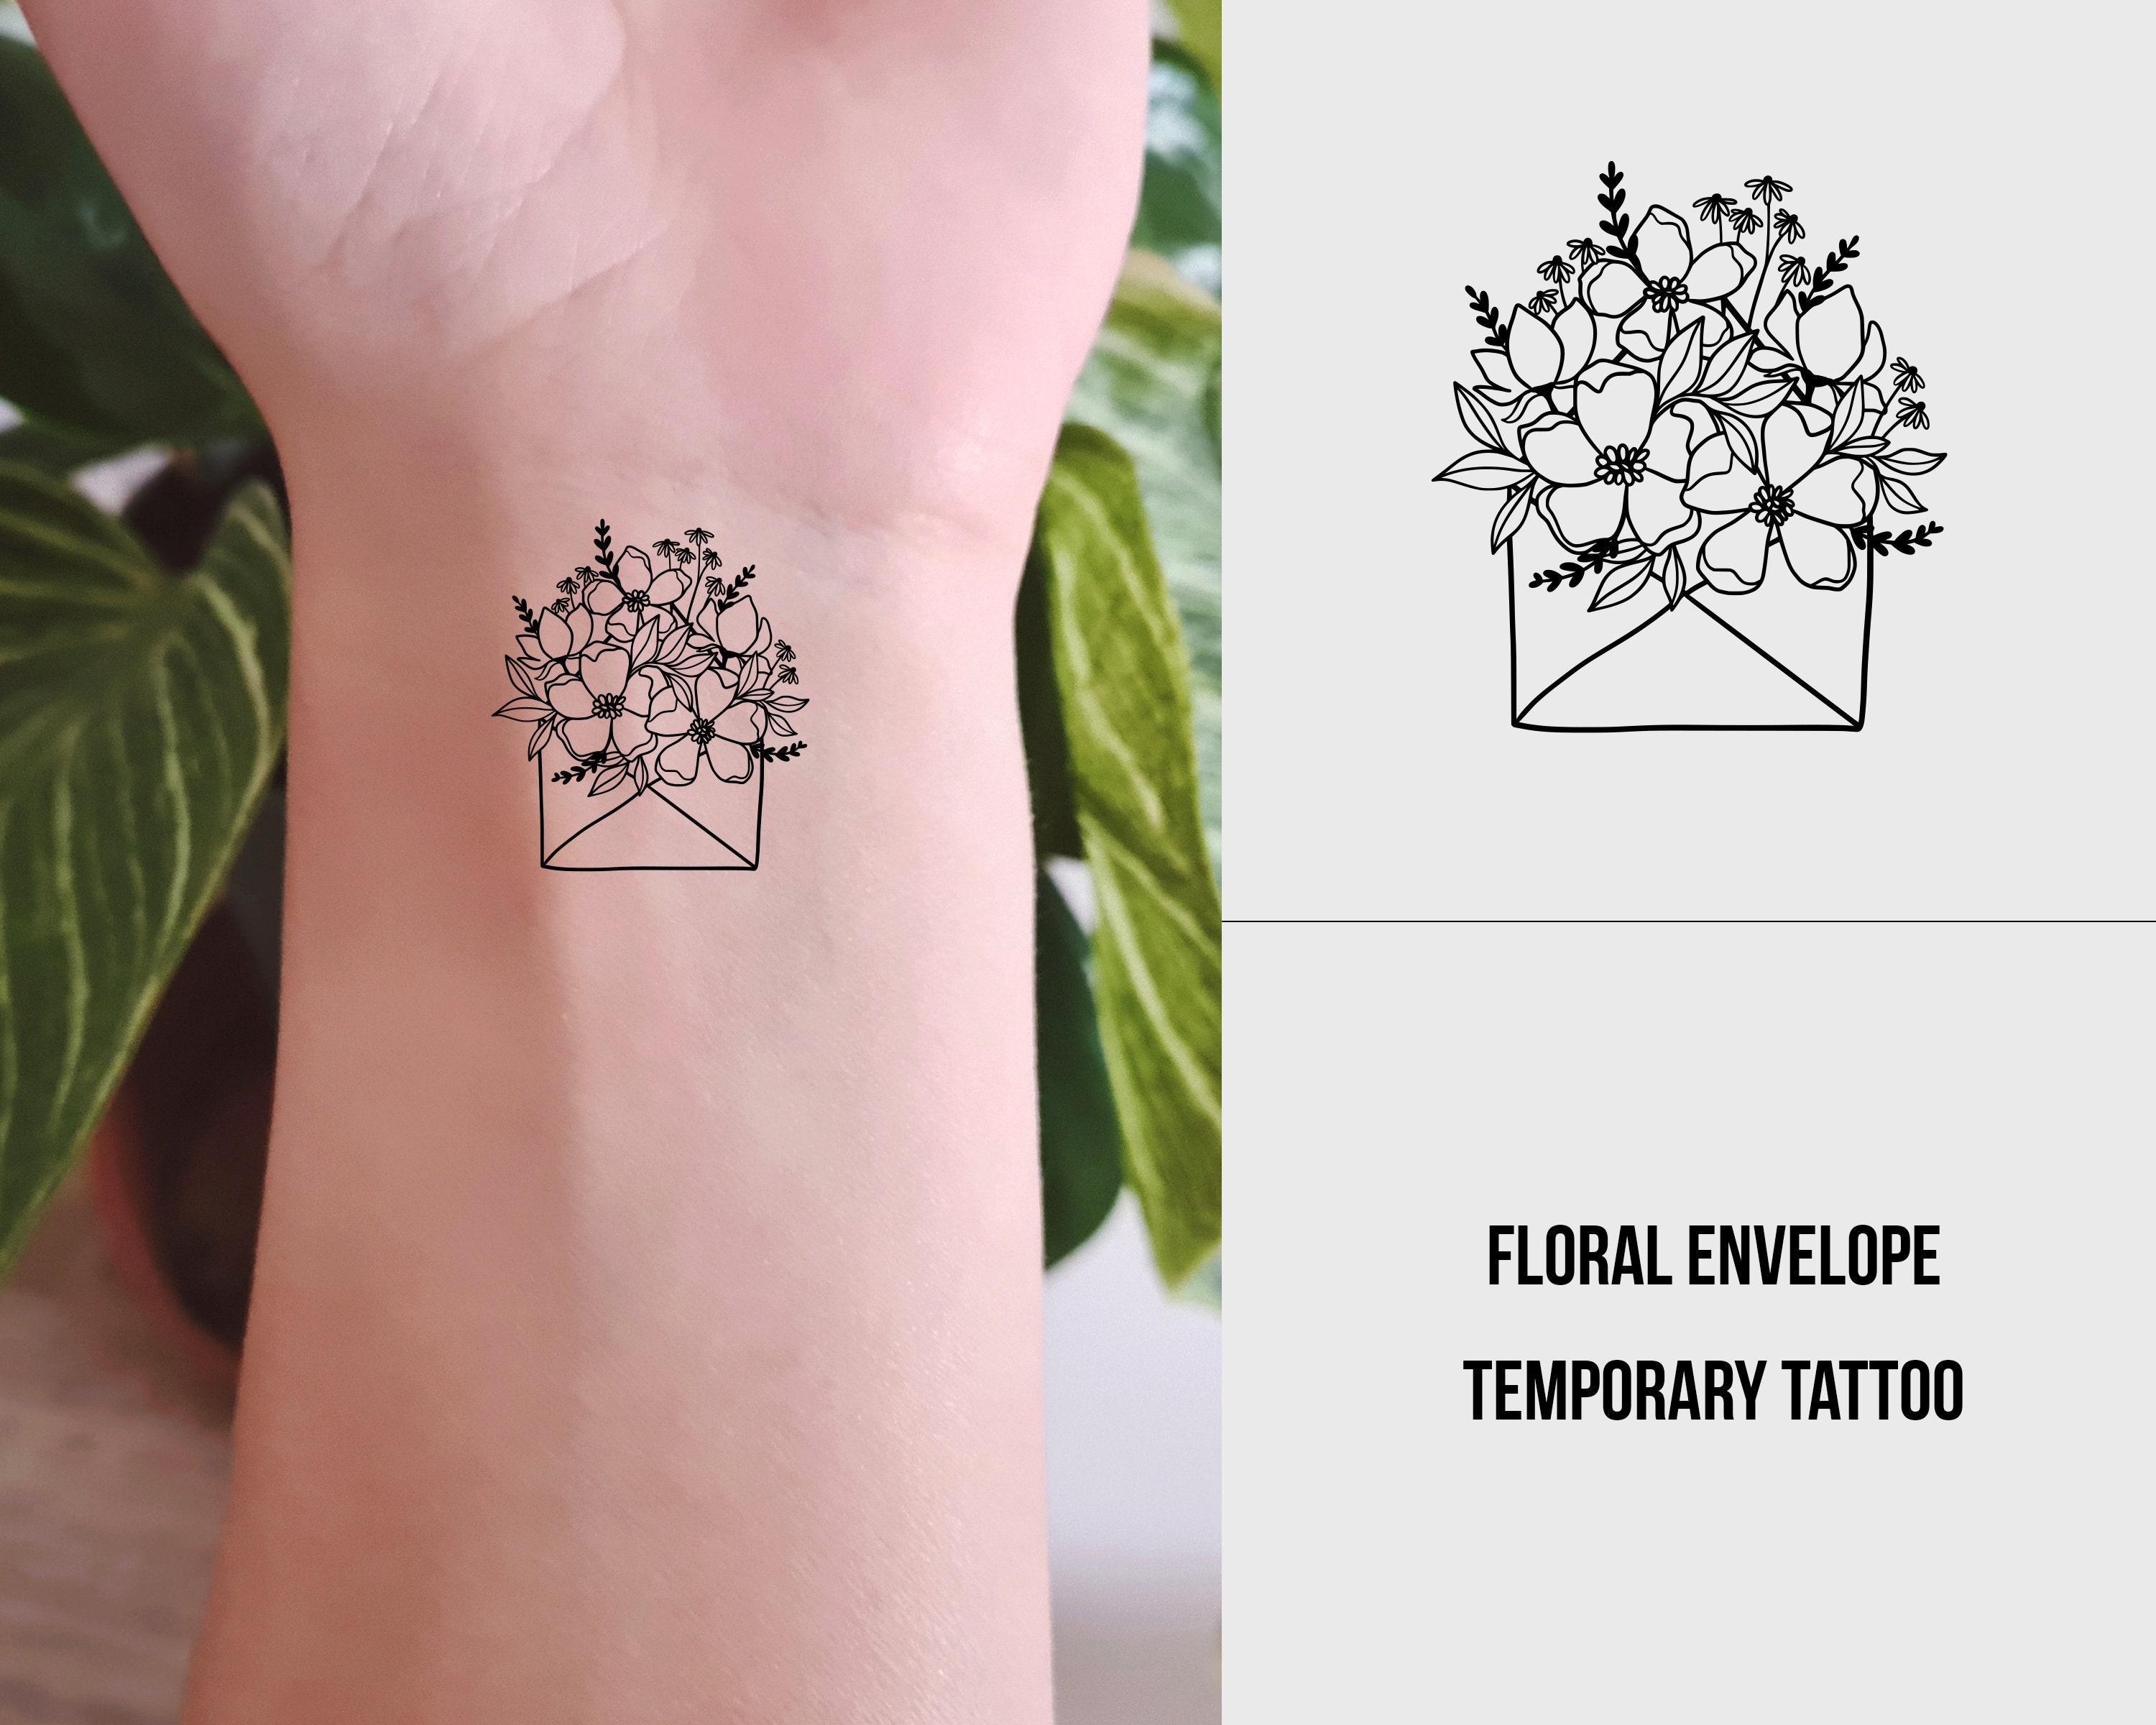 Envelope tattoo designs